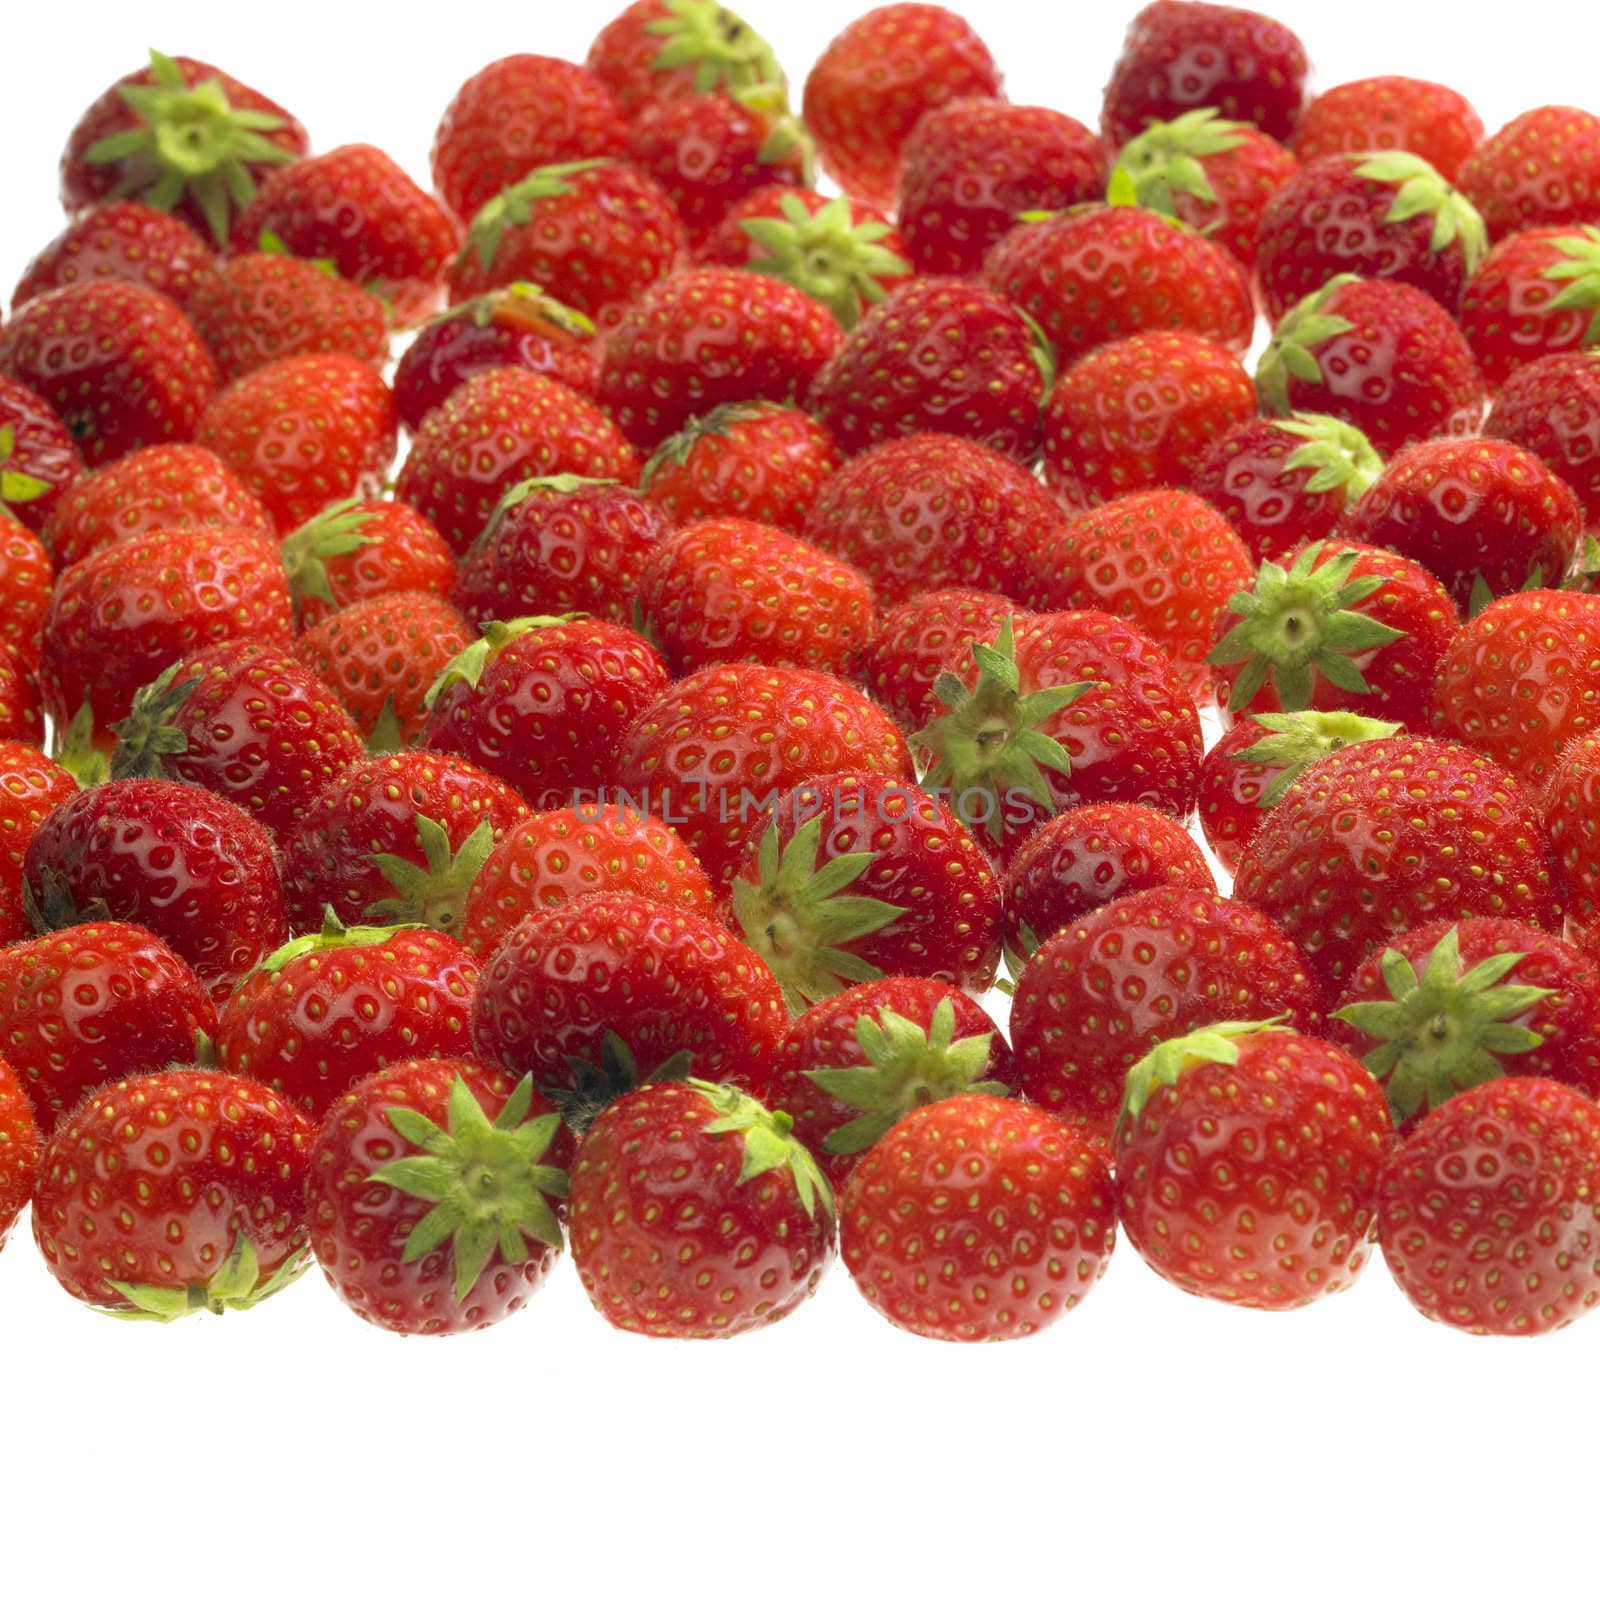 strawberries by phbcz